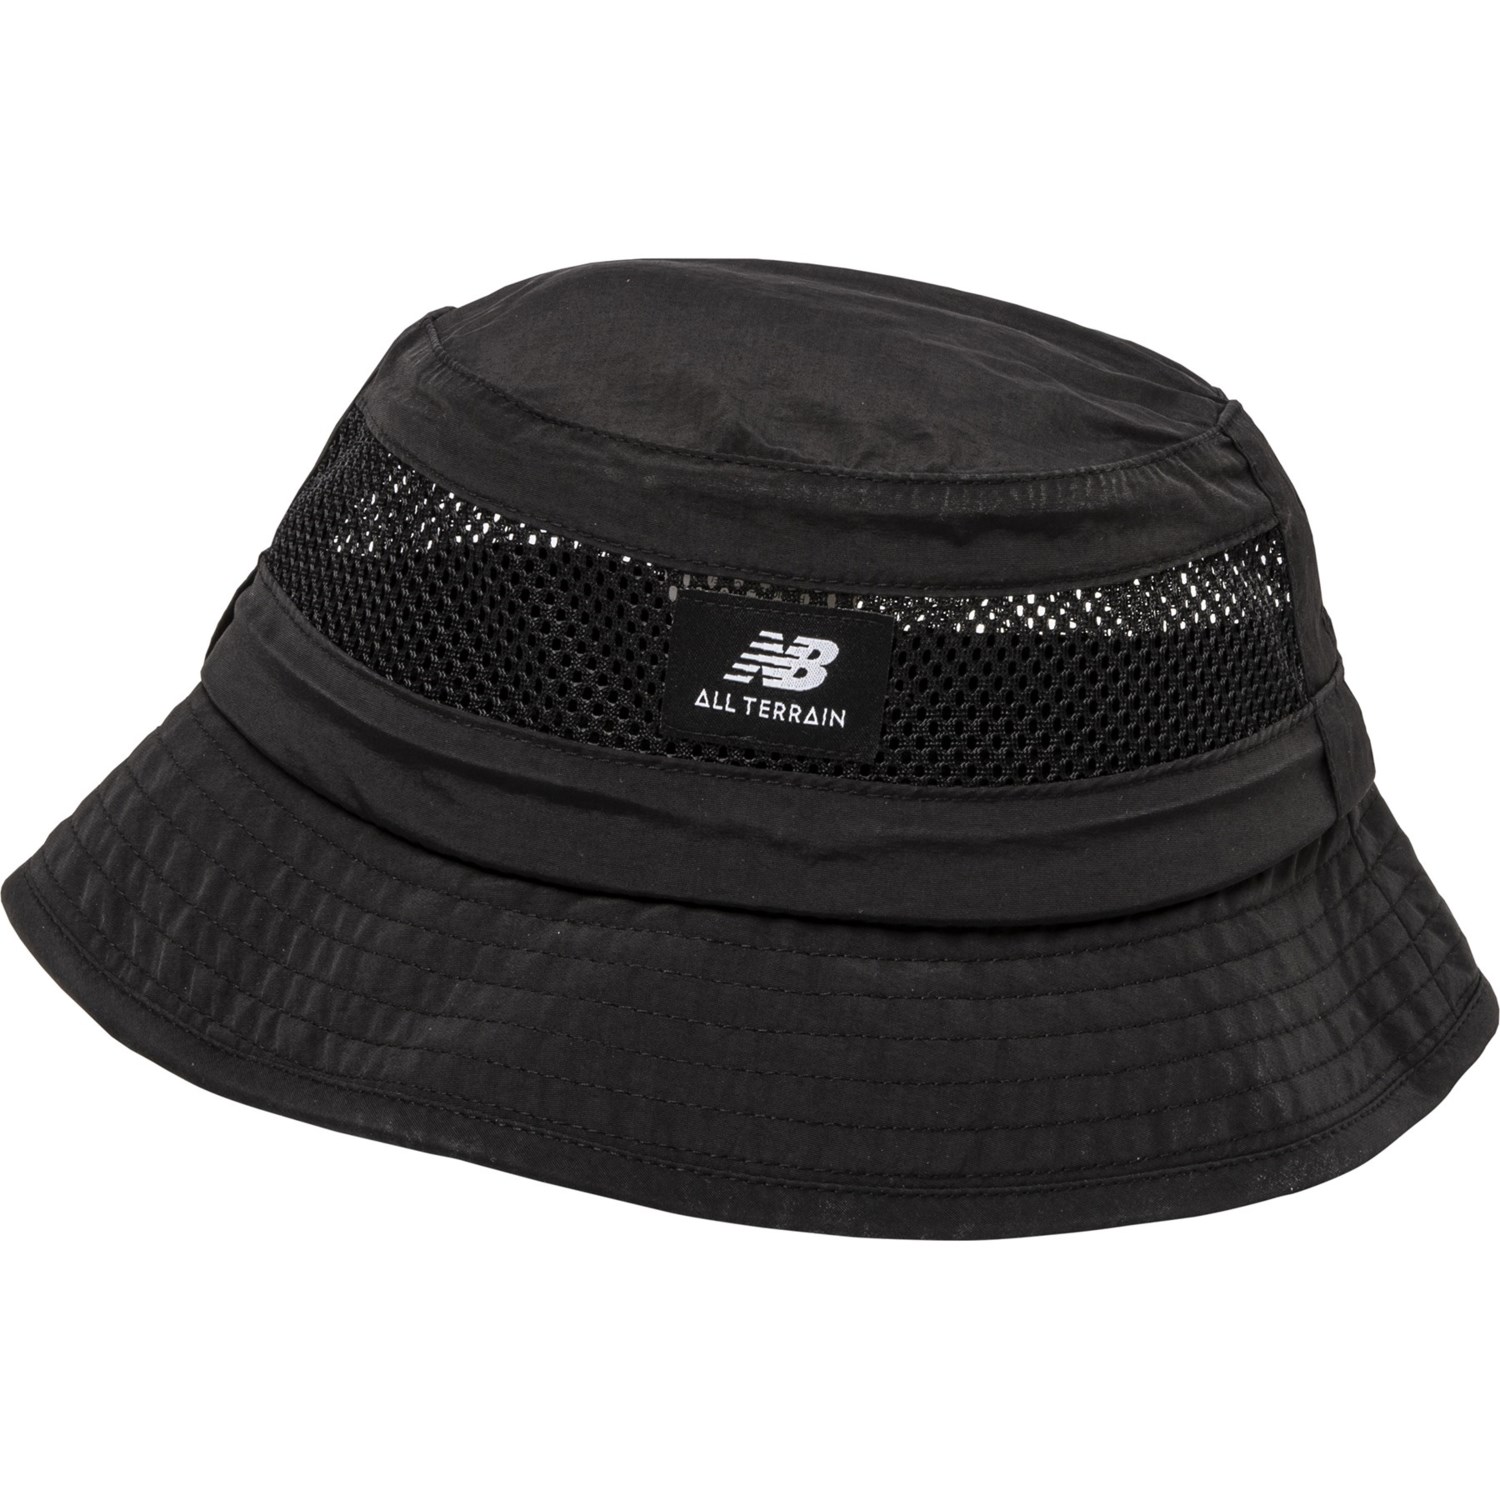 New Balance Lifestyle Bucket Hat (For Men)